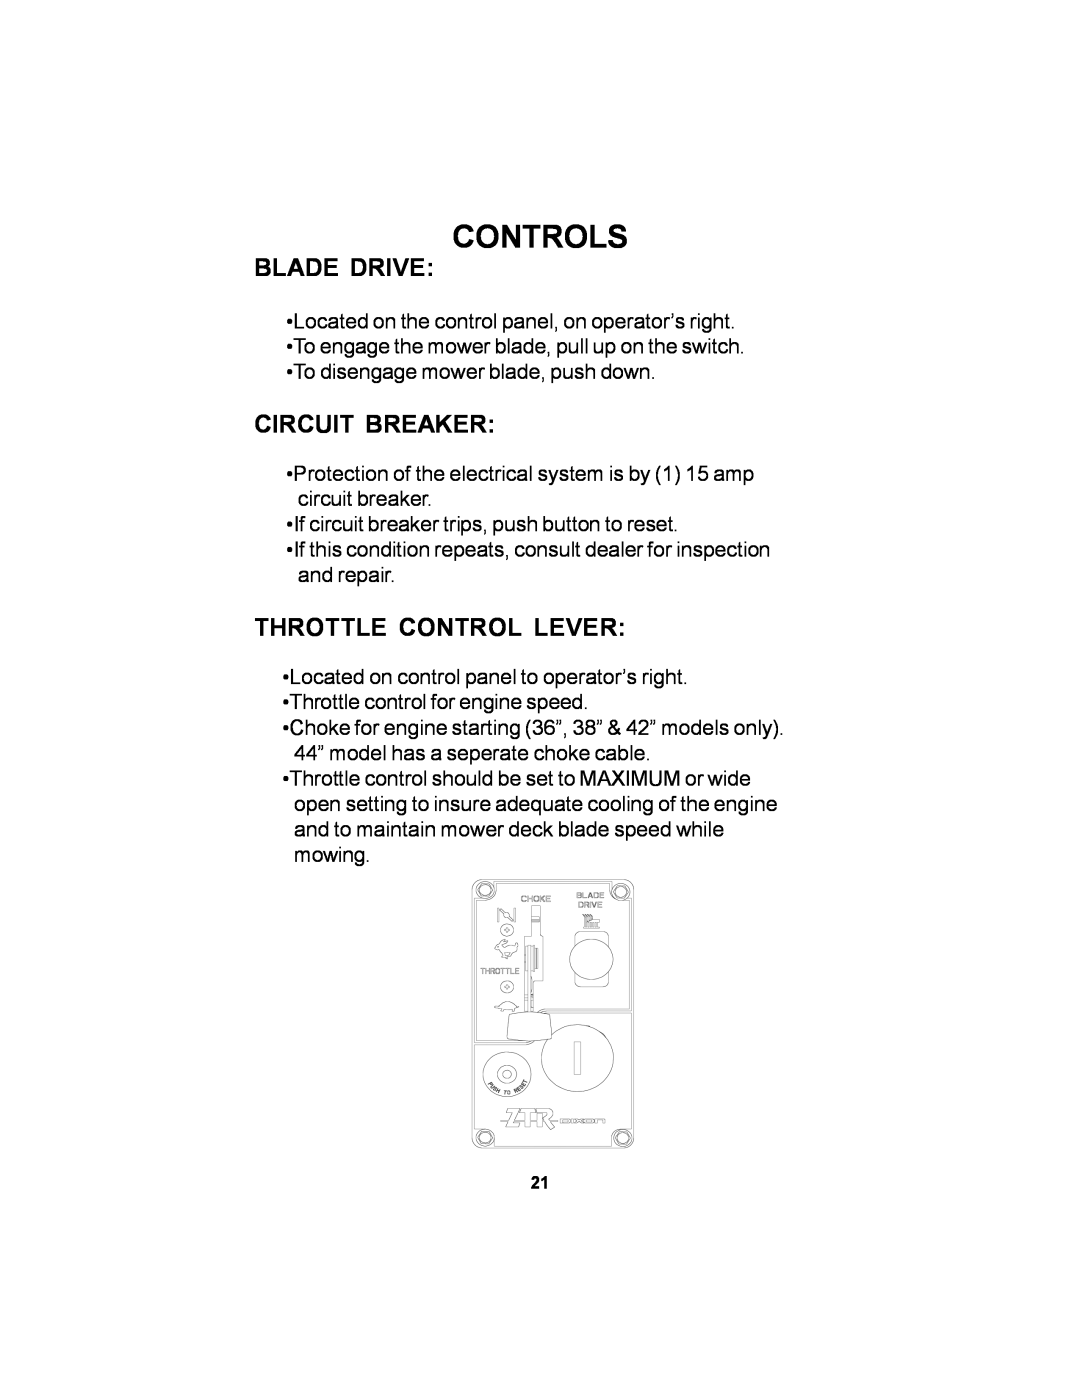 Dixon 36 manual Blade Drive, Circuit Breaker, Throttle Control Lever, Controls 